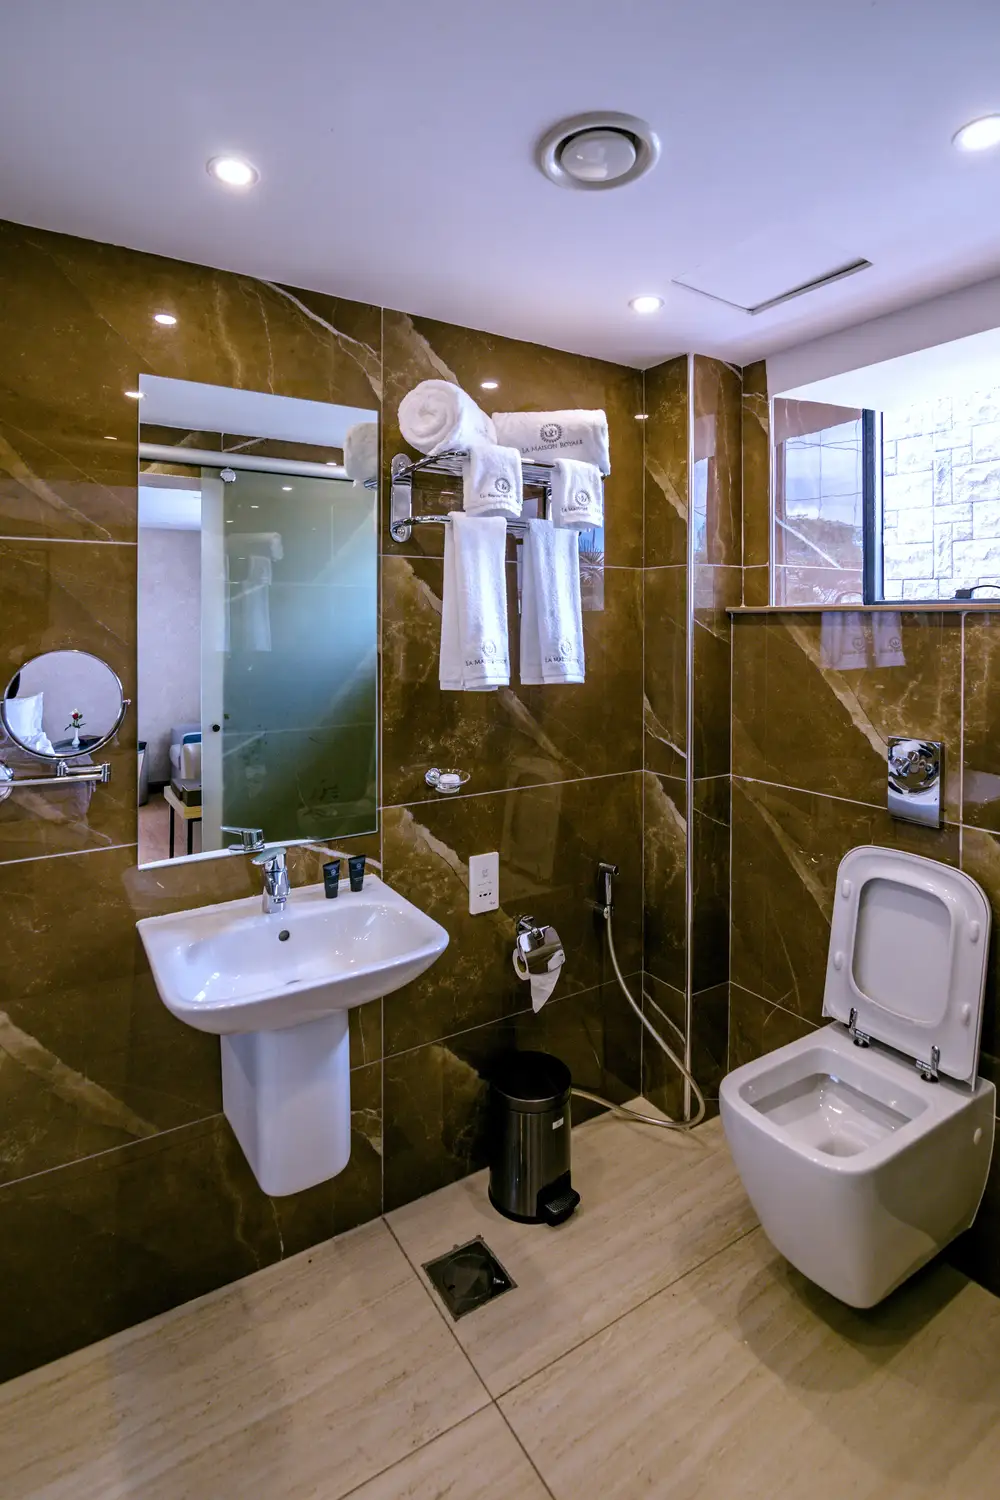 Luxury hotel bathroom and sink